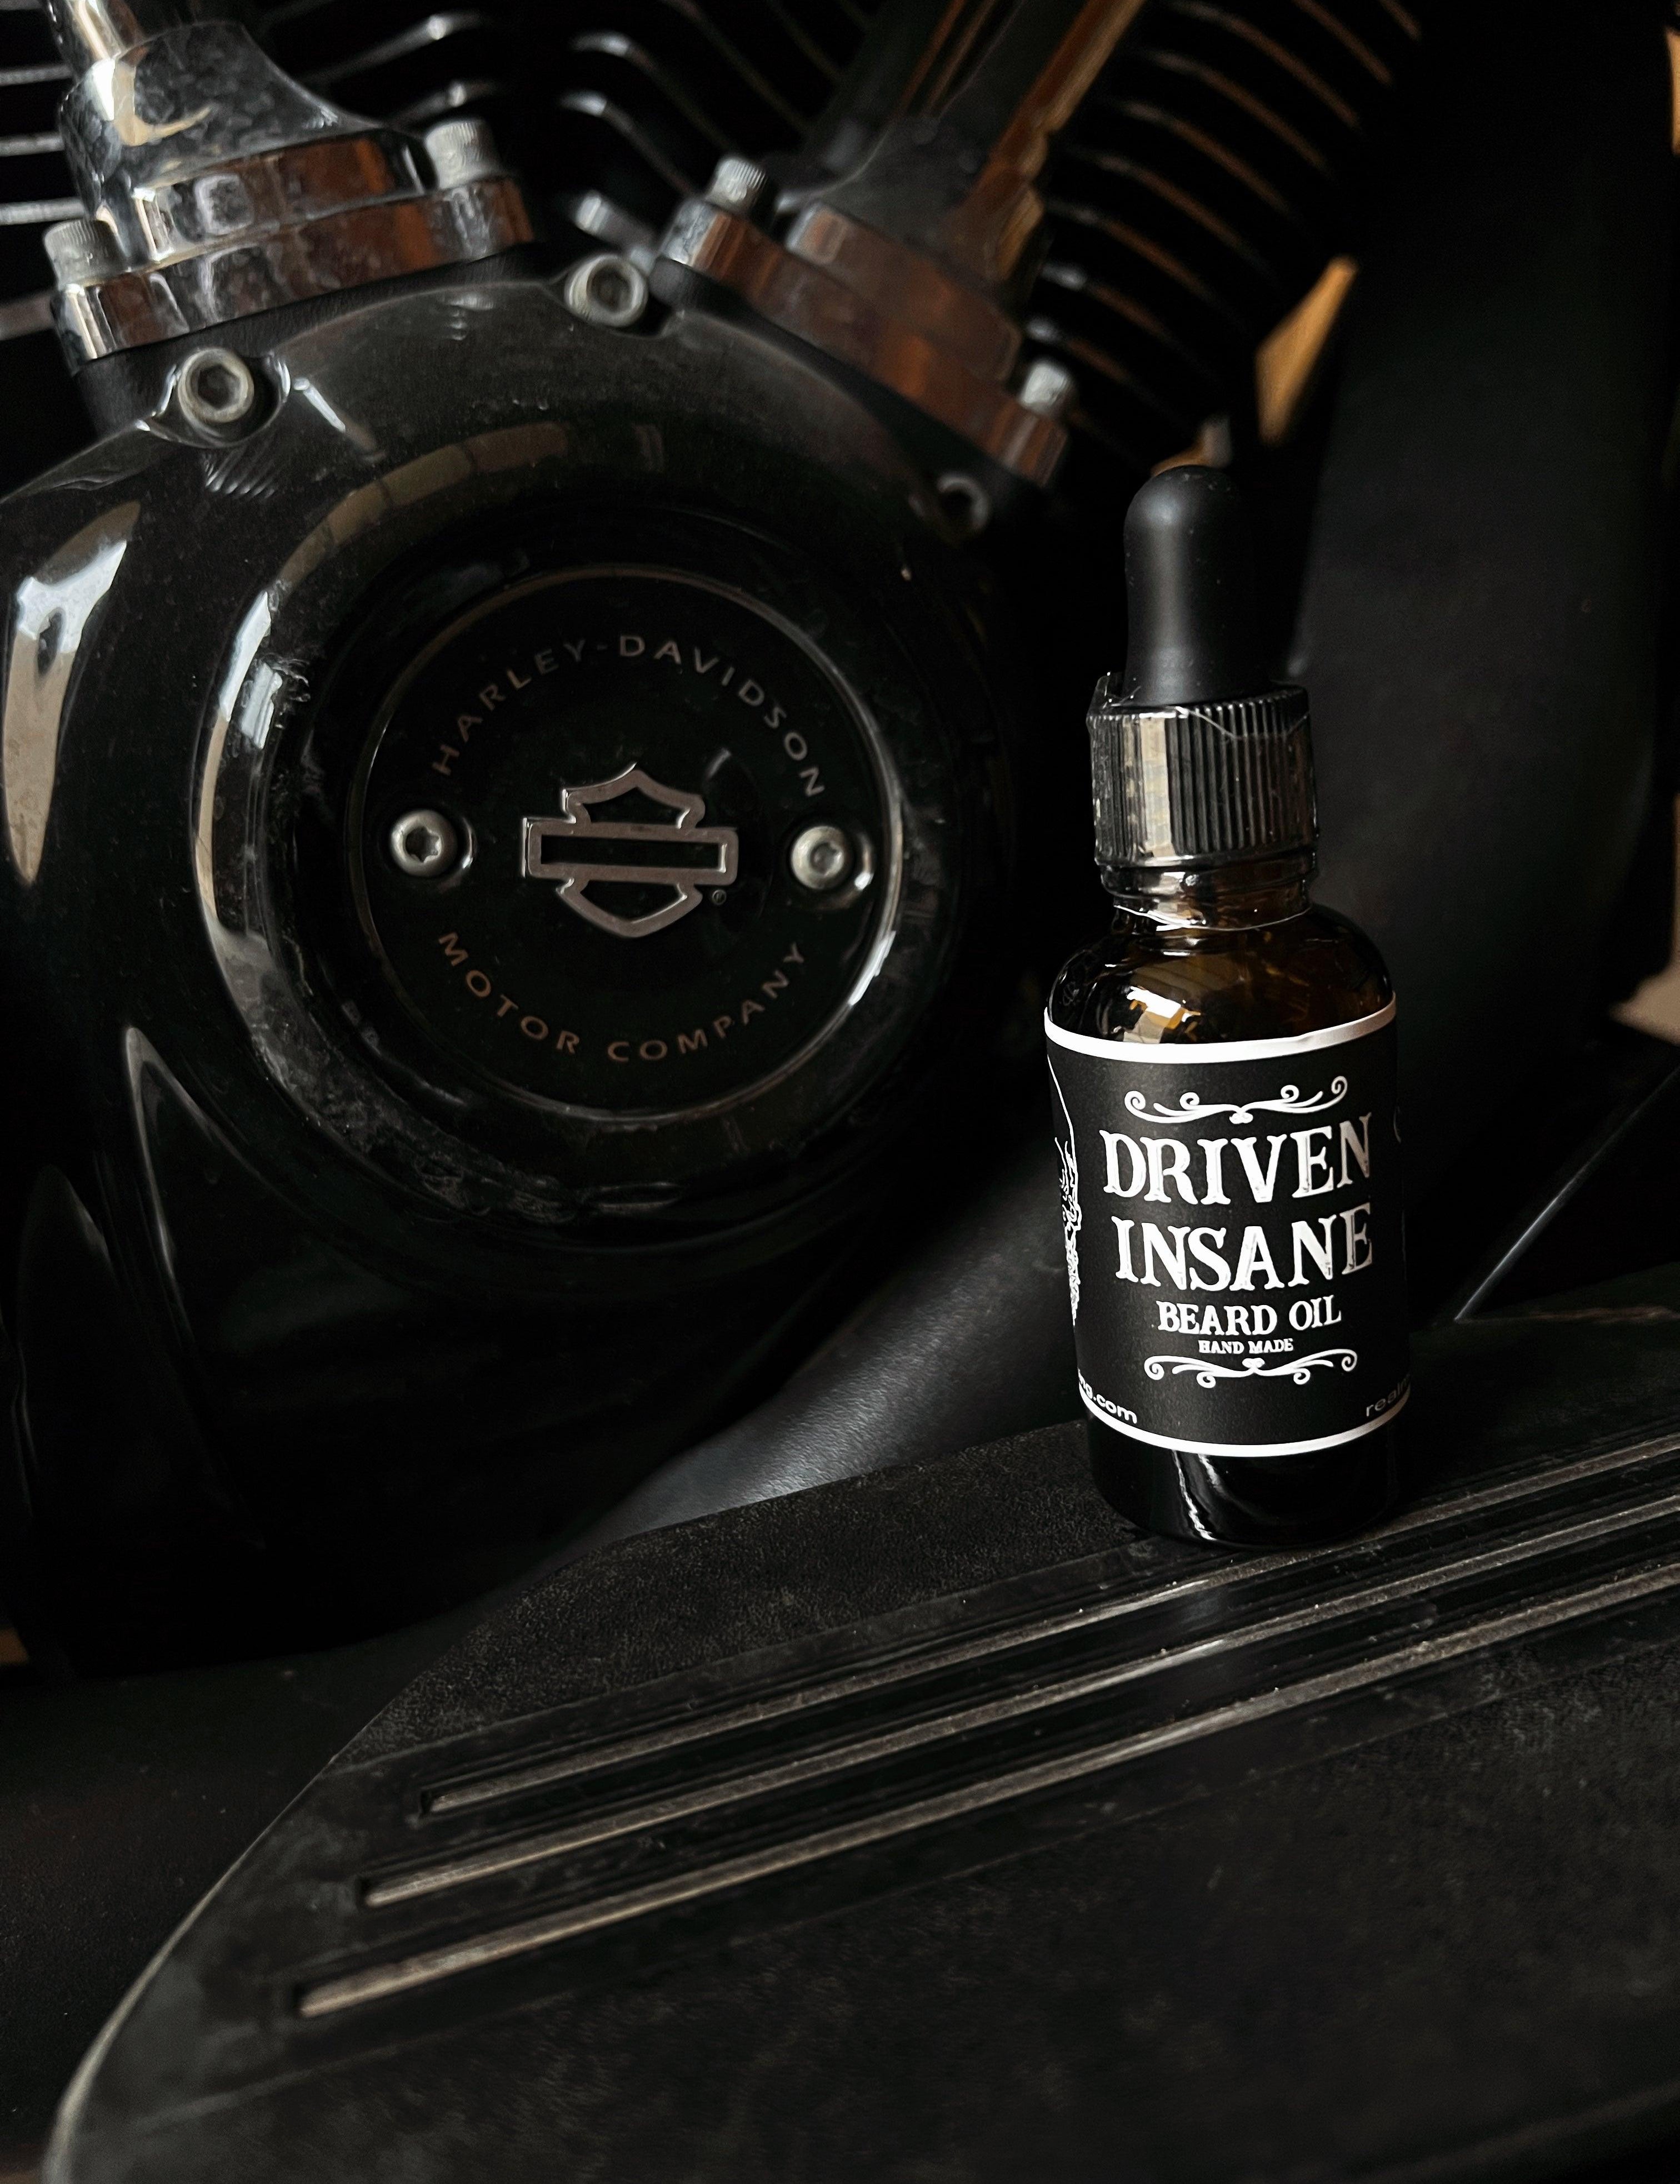 DRIVEN INSANE BEARD OIL - The Drive Clothing